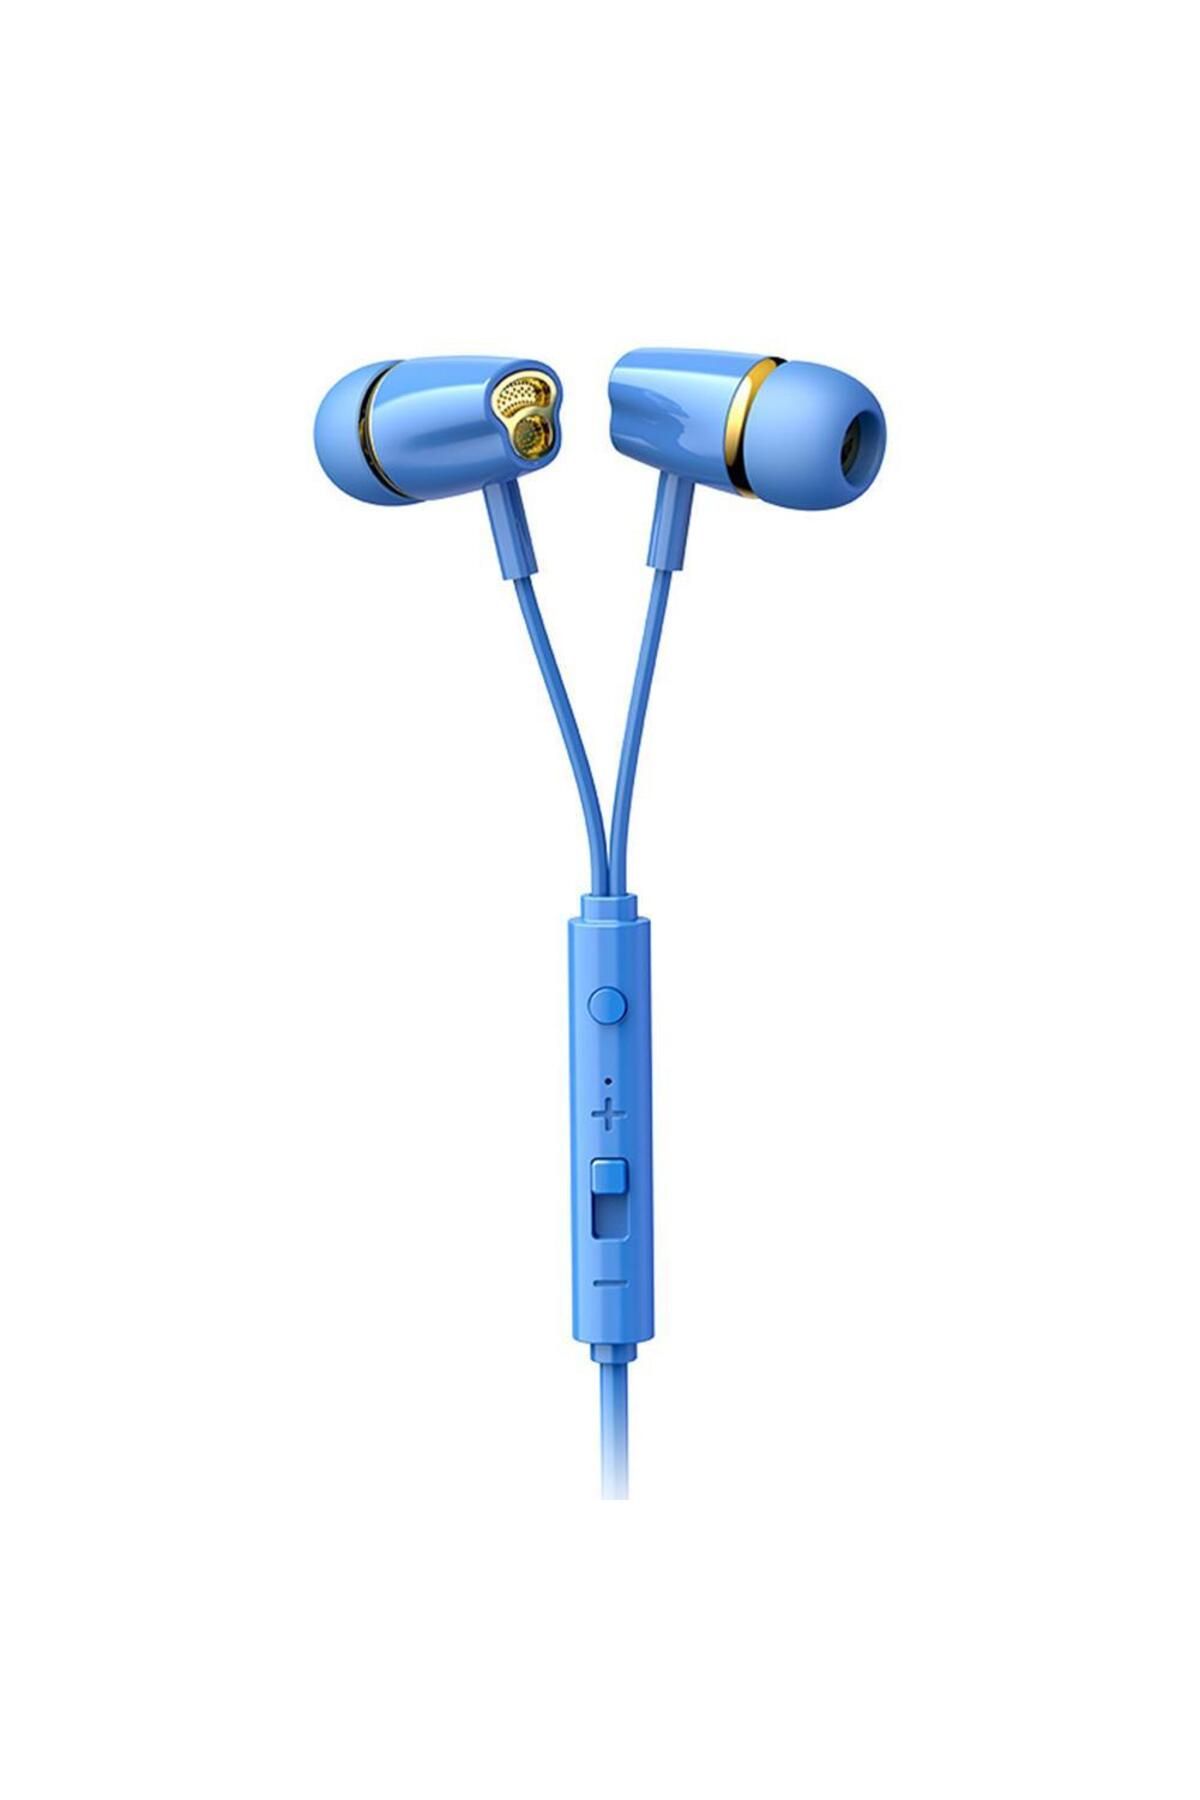 Joyroom Jr-el114 3.5mm Evrensel Kablolu Kulak Içi Stereo Kulaklık Mavi